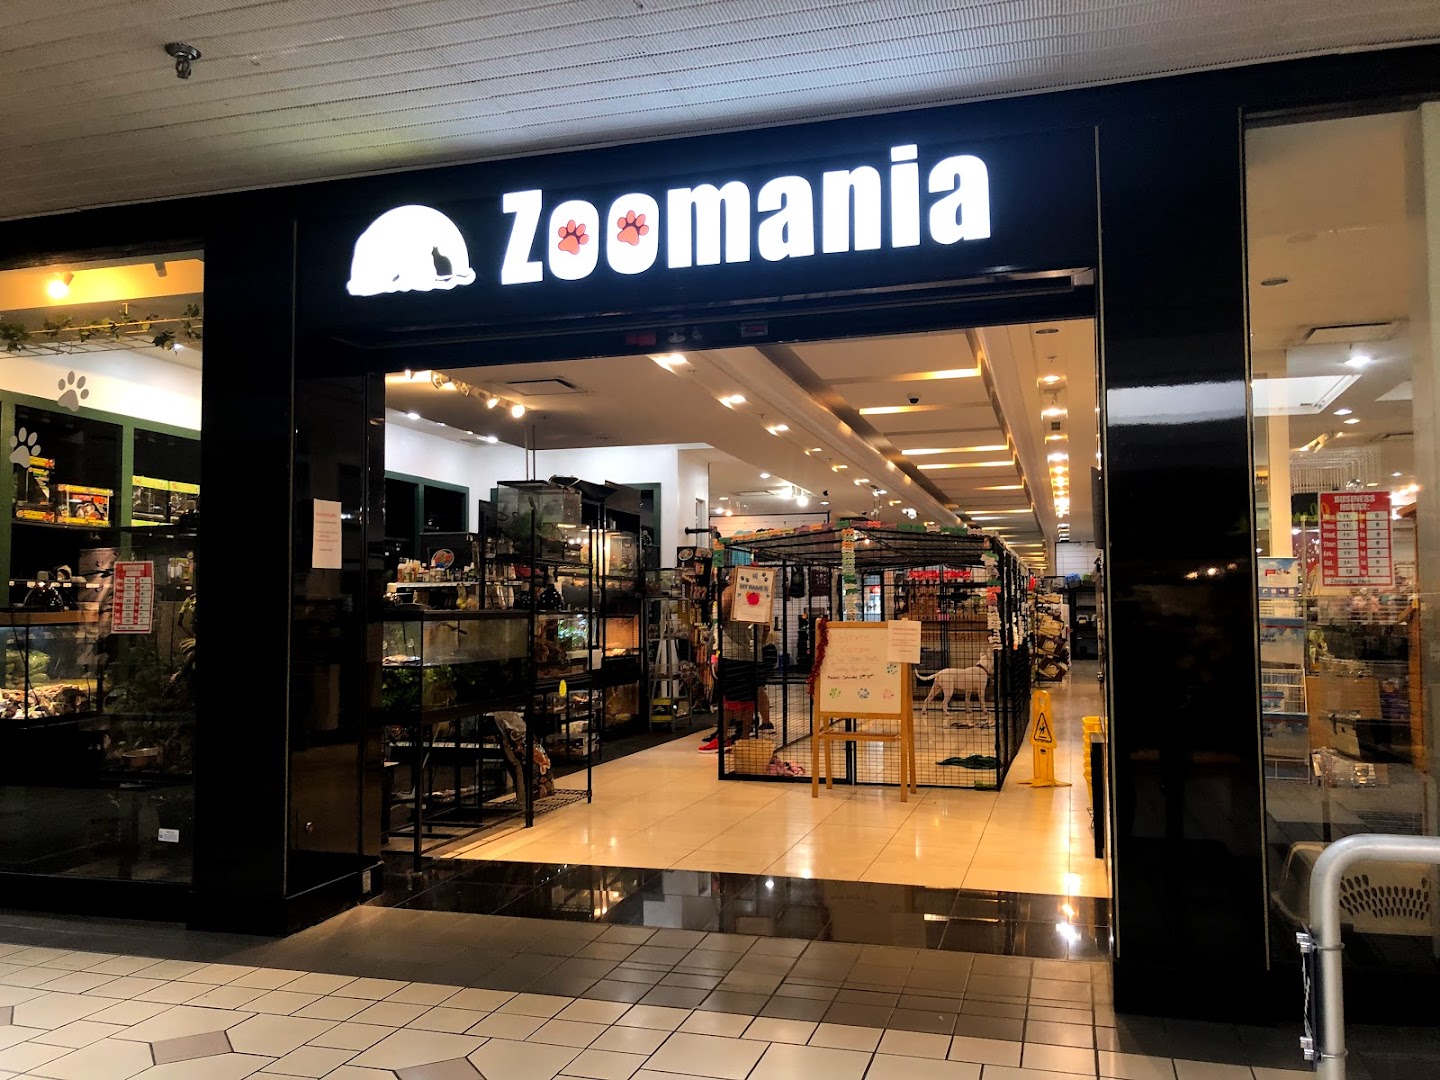 Zoomania